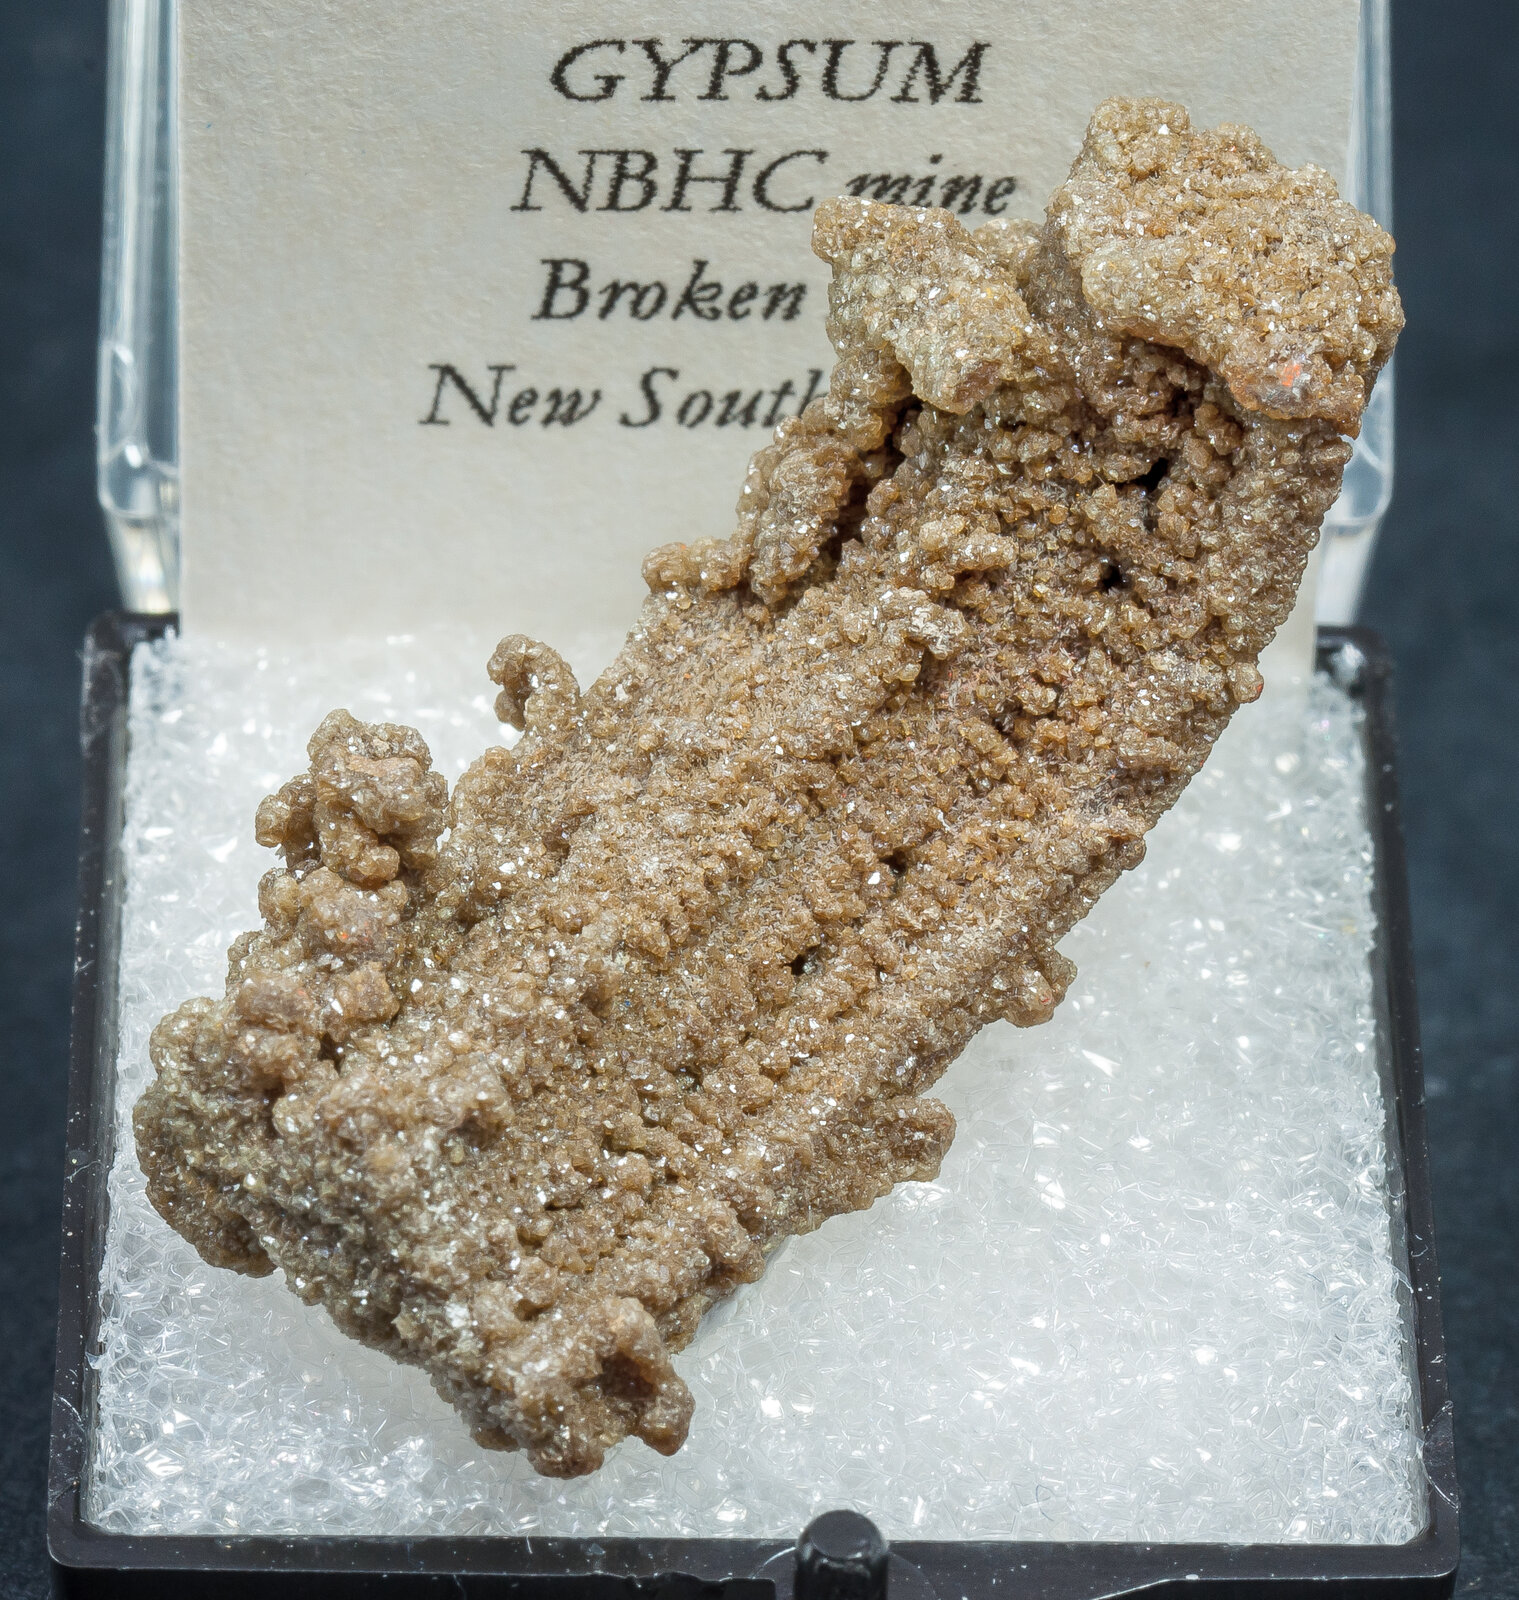 specimens/s_imagesAN2/Gypsum-TW14AN2f2.jpg